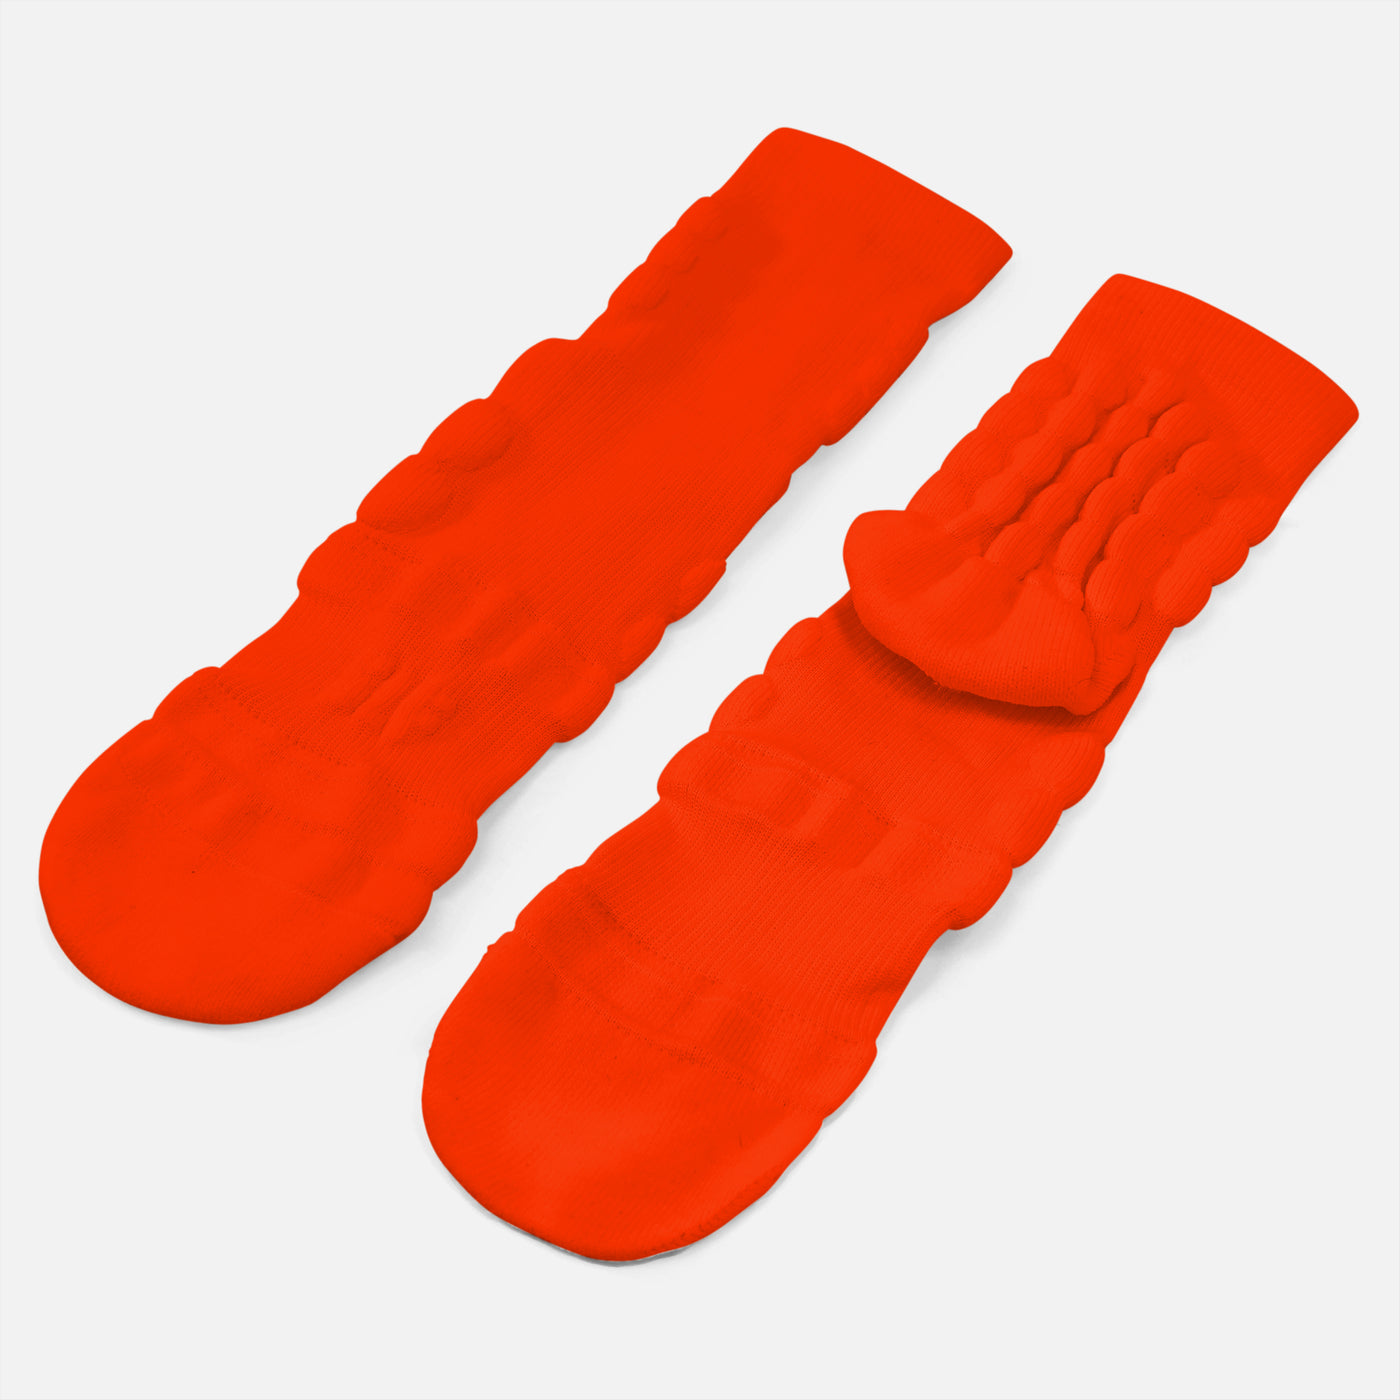 Hue Orange Football Padded Short Kids Socks